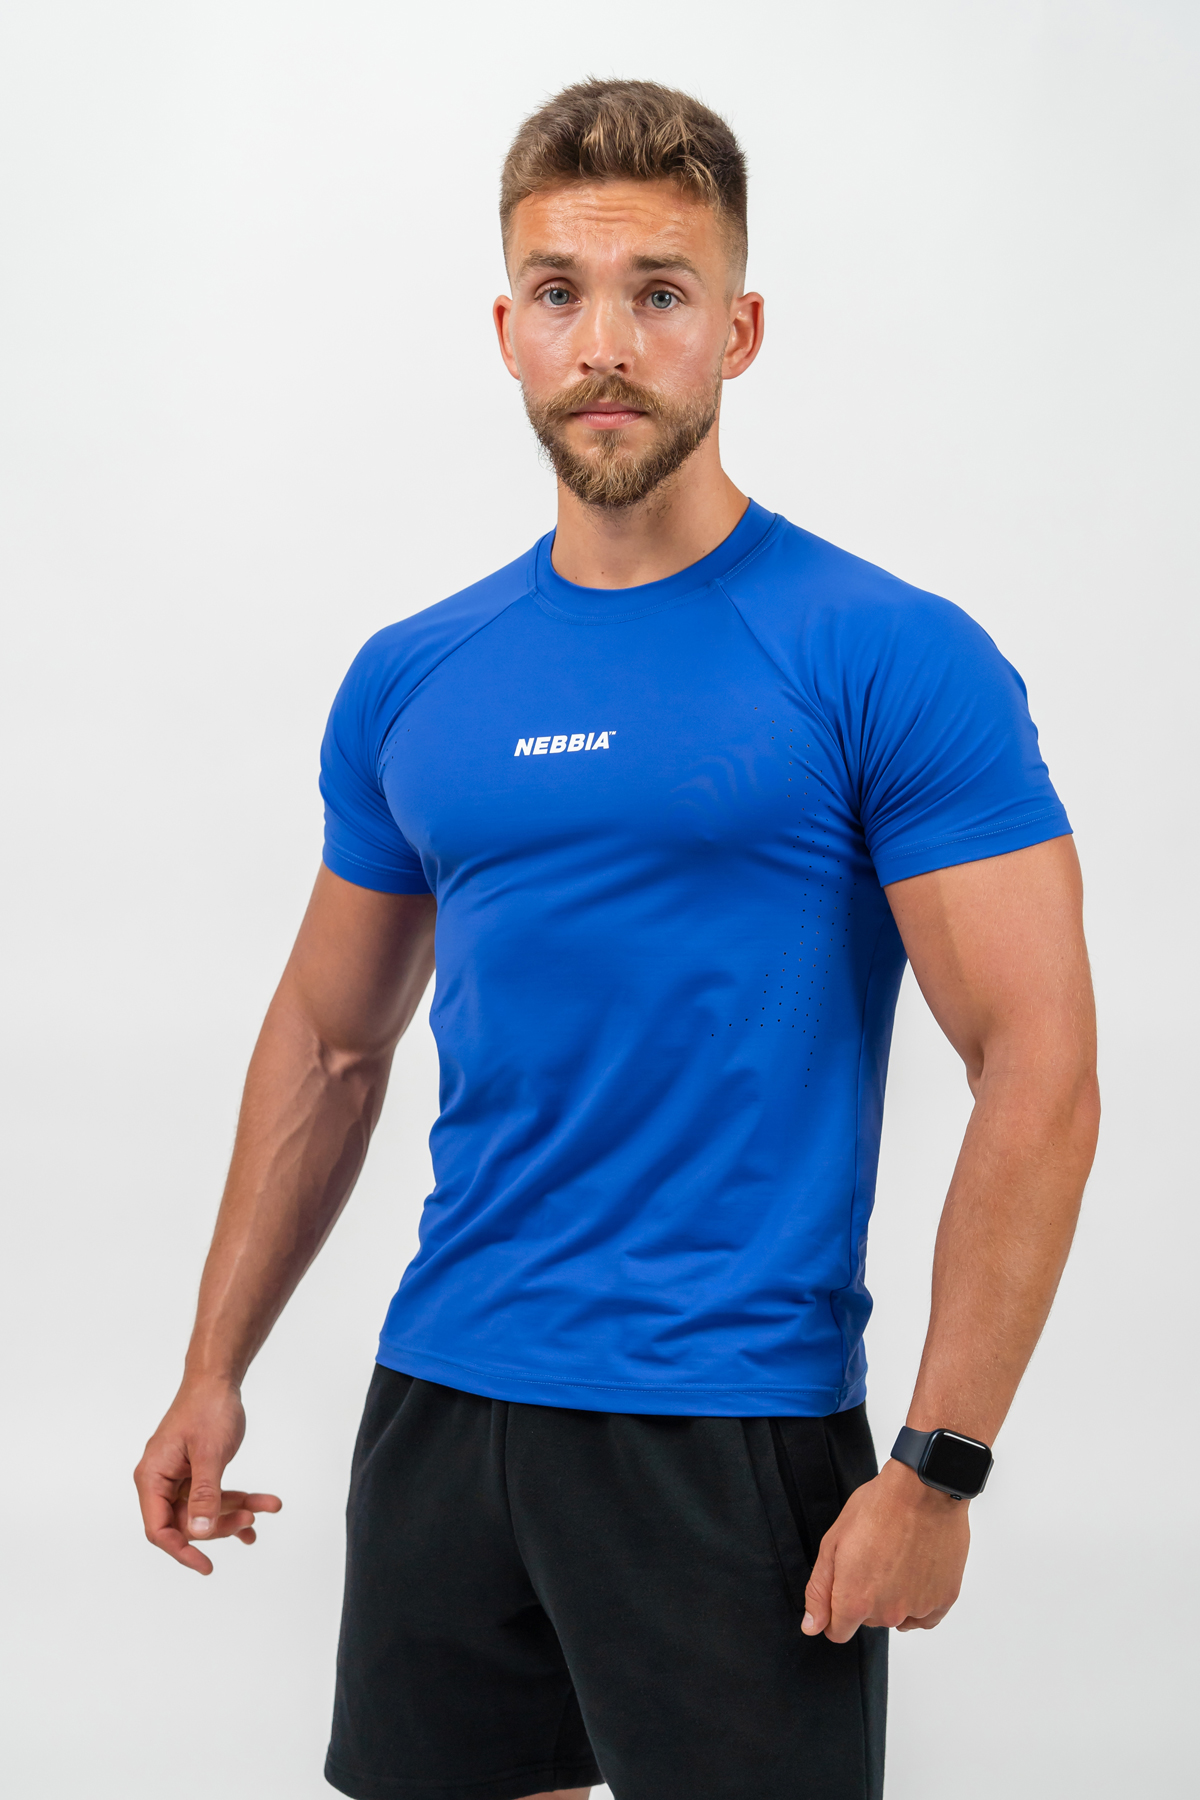 Men's Workout Compression T-shirt PERFORMANCE Performance+